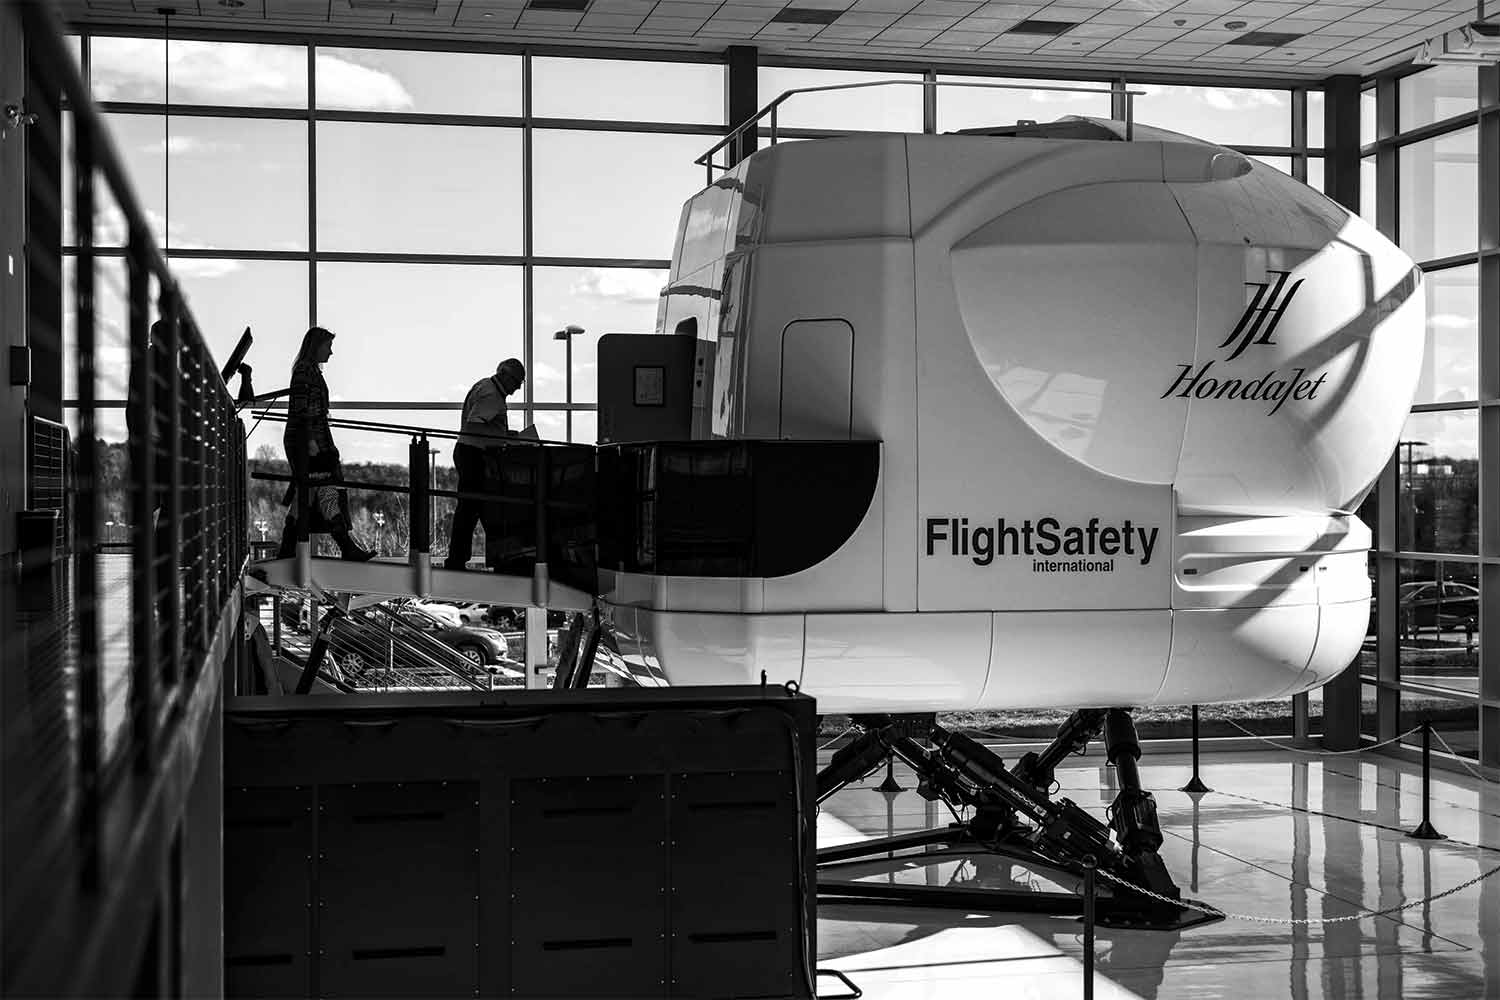 Honda Aircraft Company extends FlightSafety International partnership